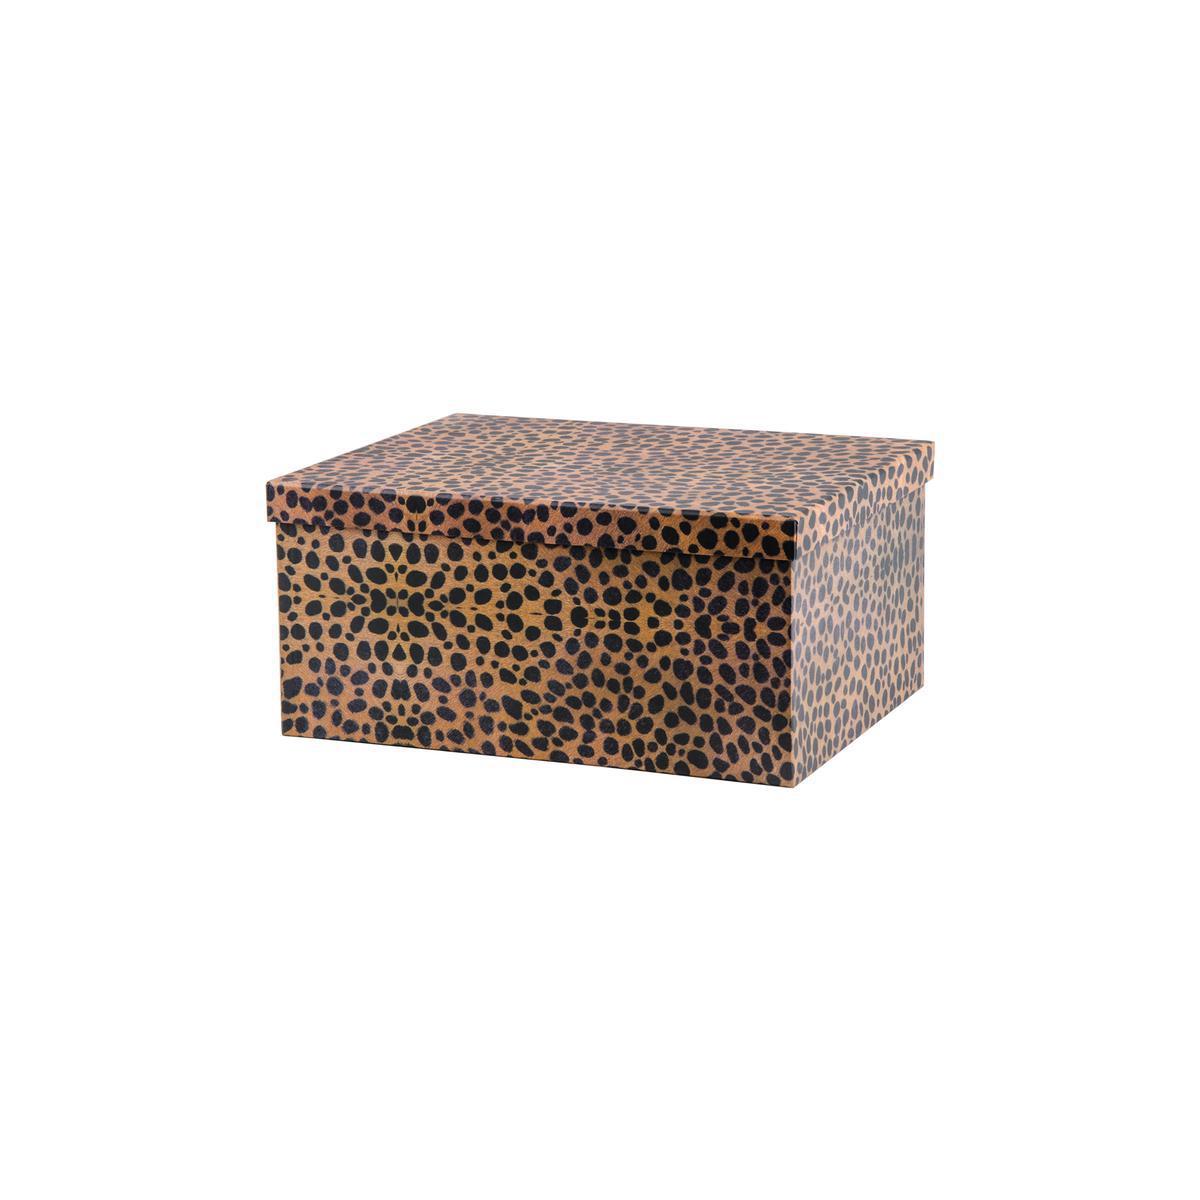 Boite tigré en carton - 25,5 x 19 x 10,5 cm - Noir et marron